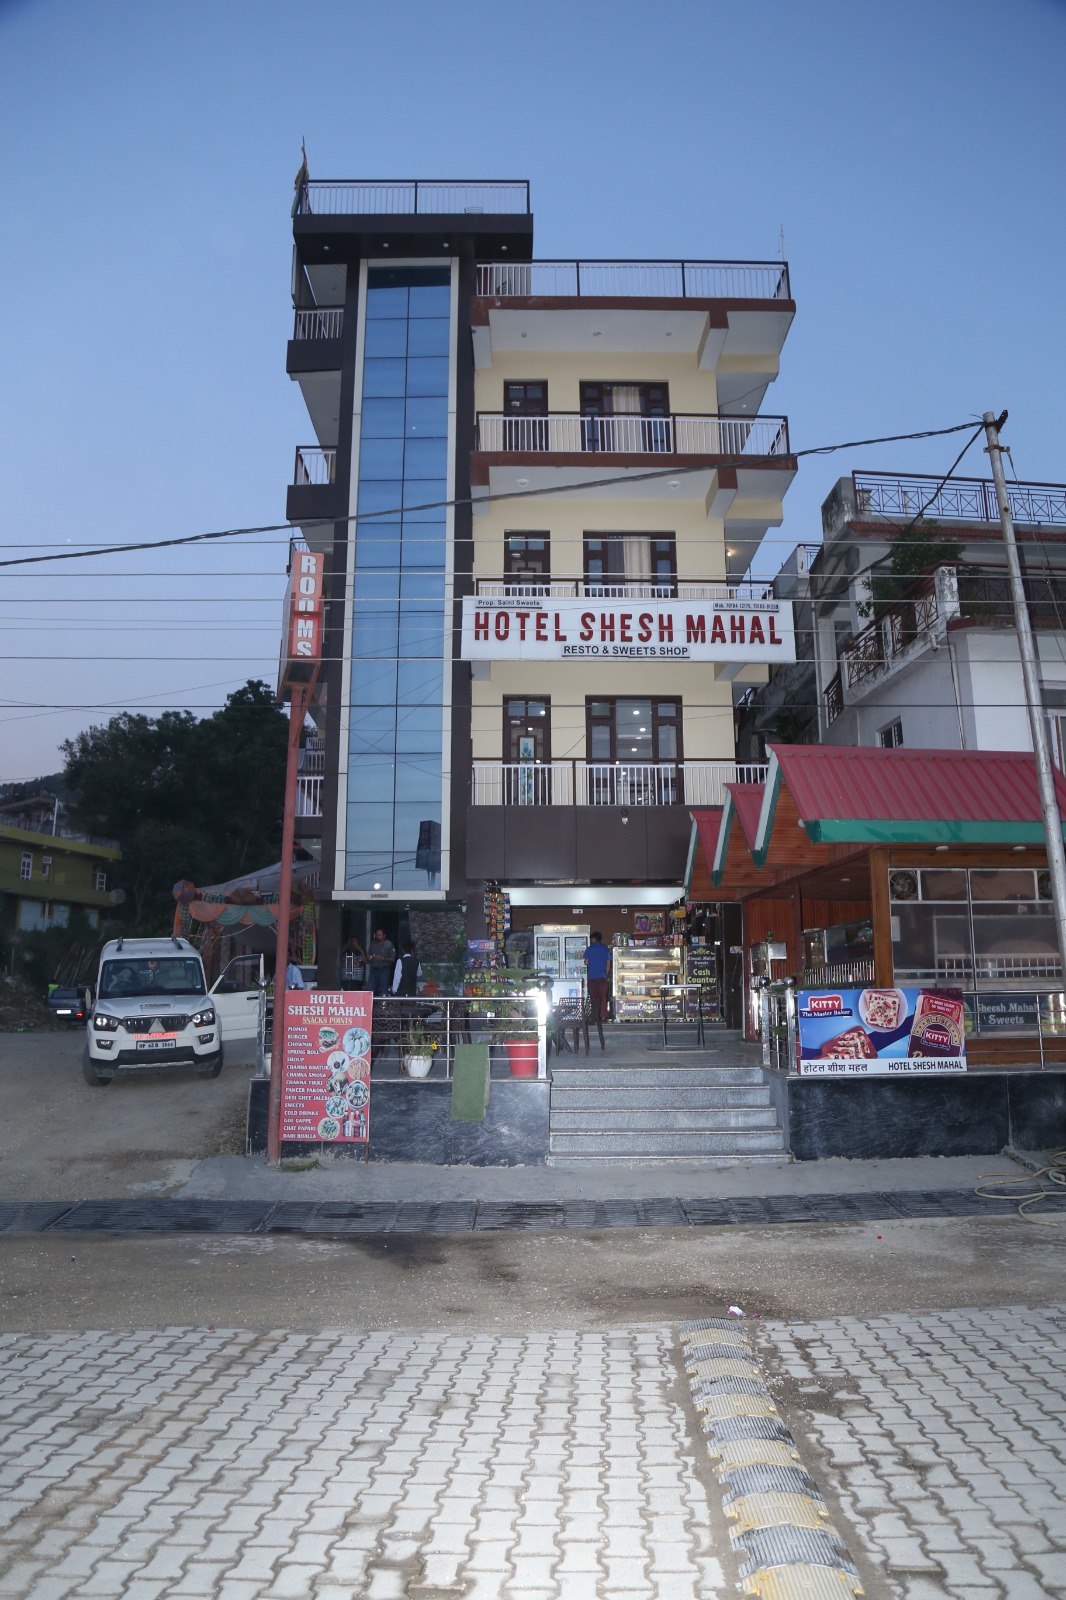 Hotel Sheesh Mahal